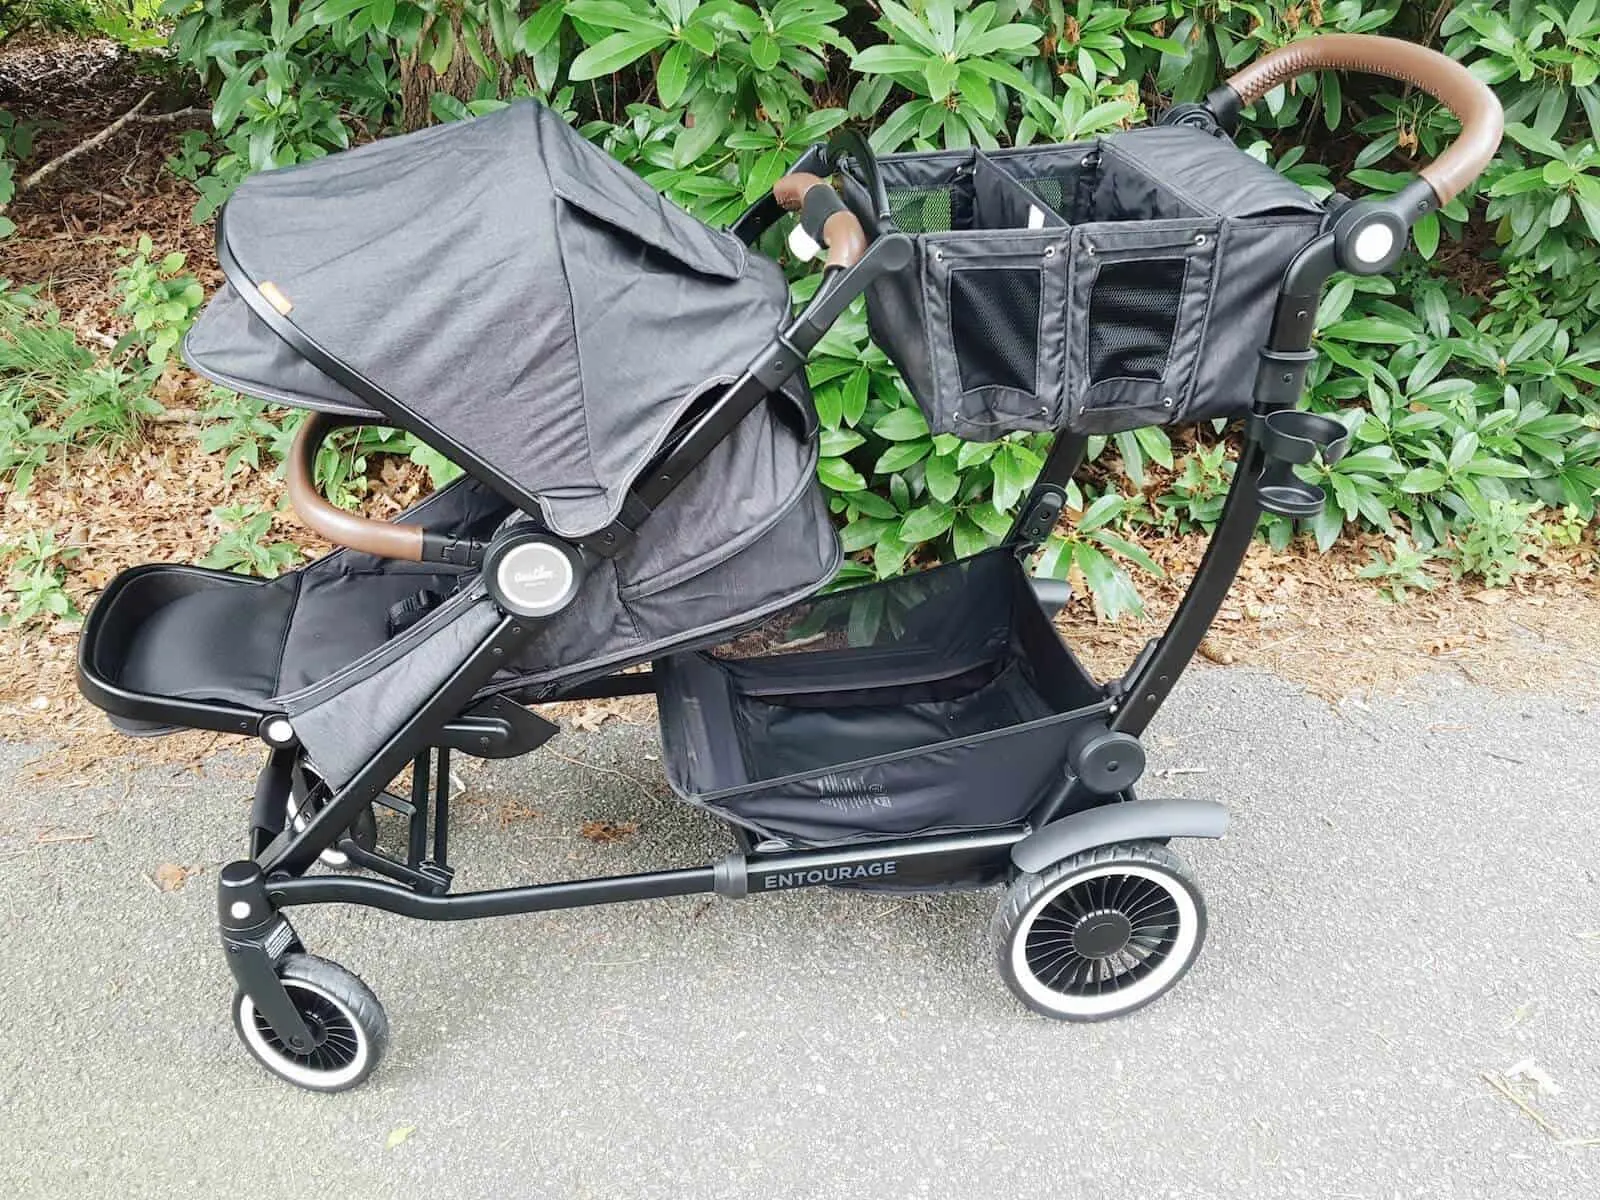 Austlen Entourage Workhorse Stroller for families on walking path.